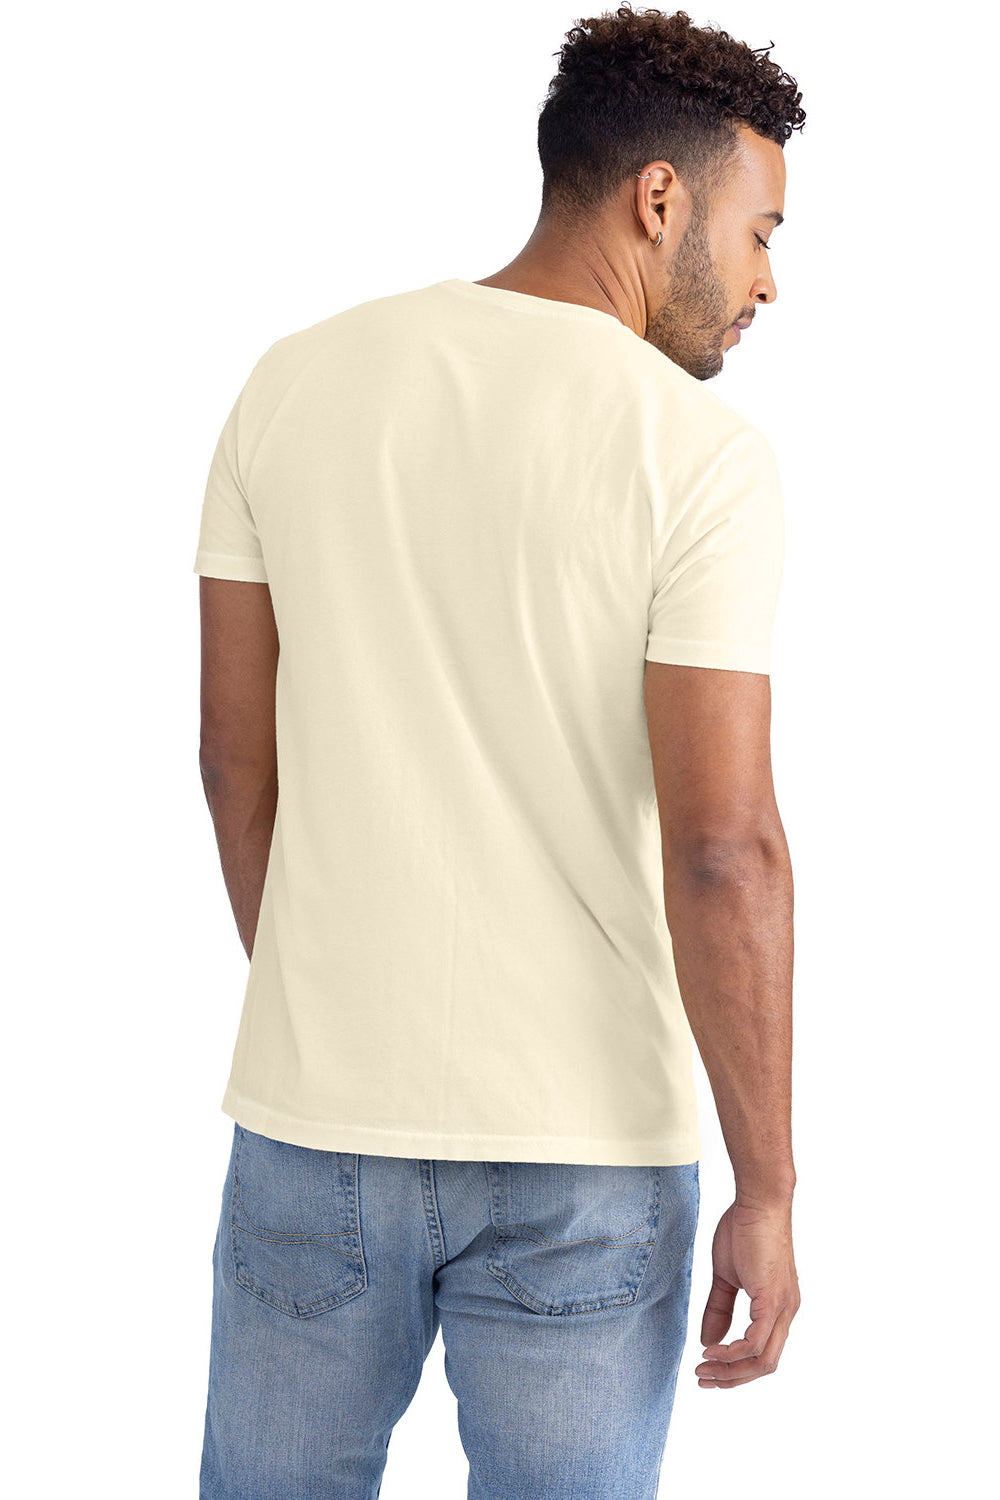 Next Level 3600SW Mens Soft Wash Short Sleeve Crewneck T-Shirt Natural Back